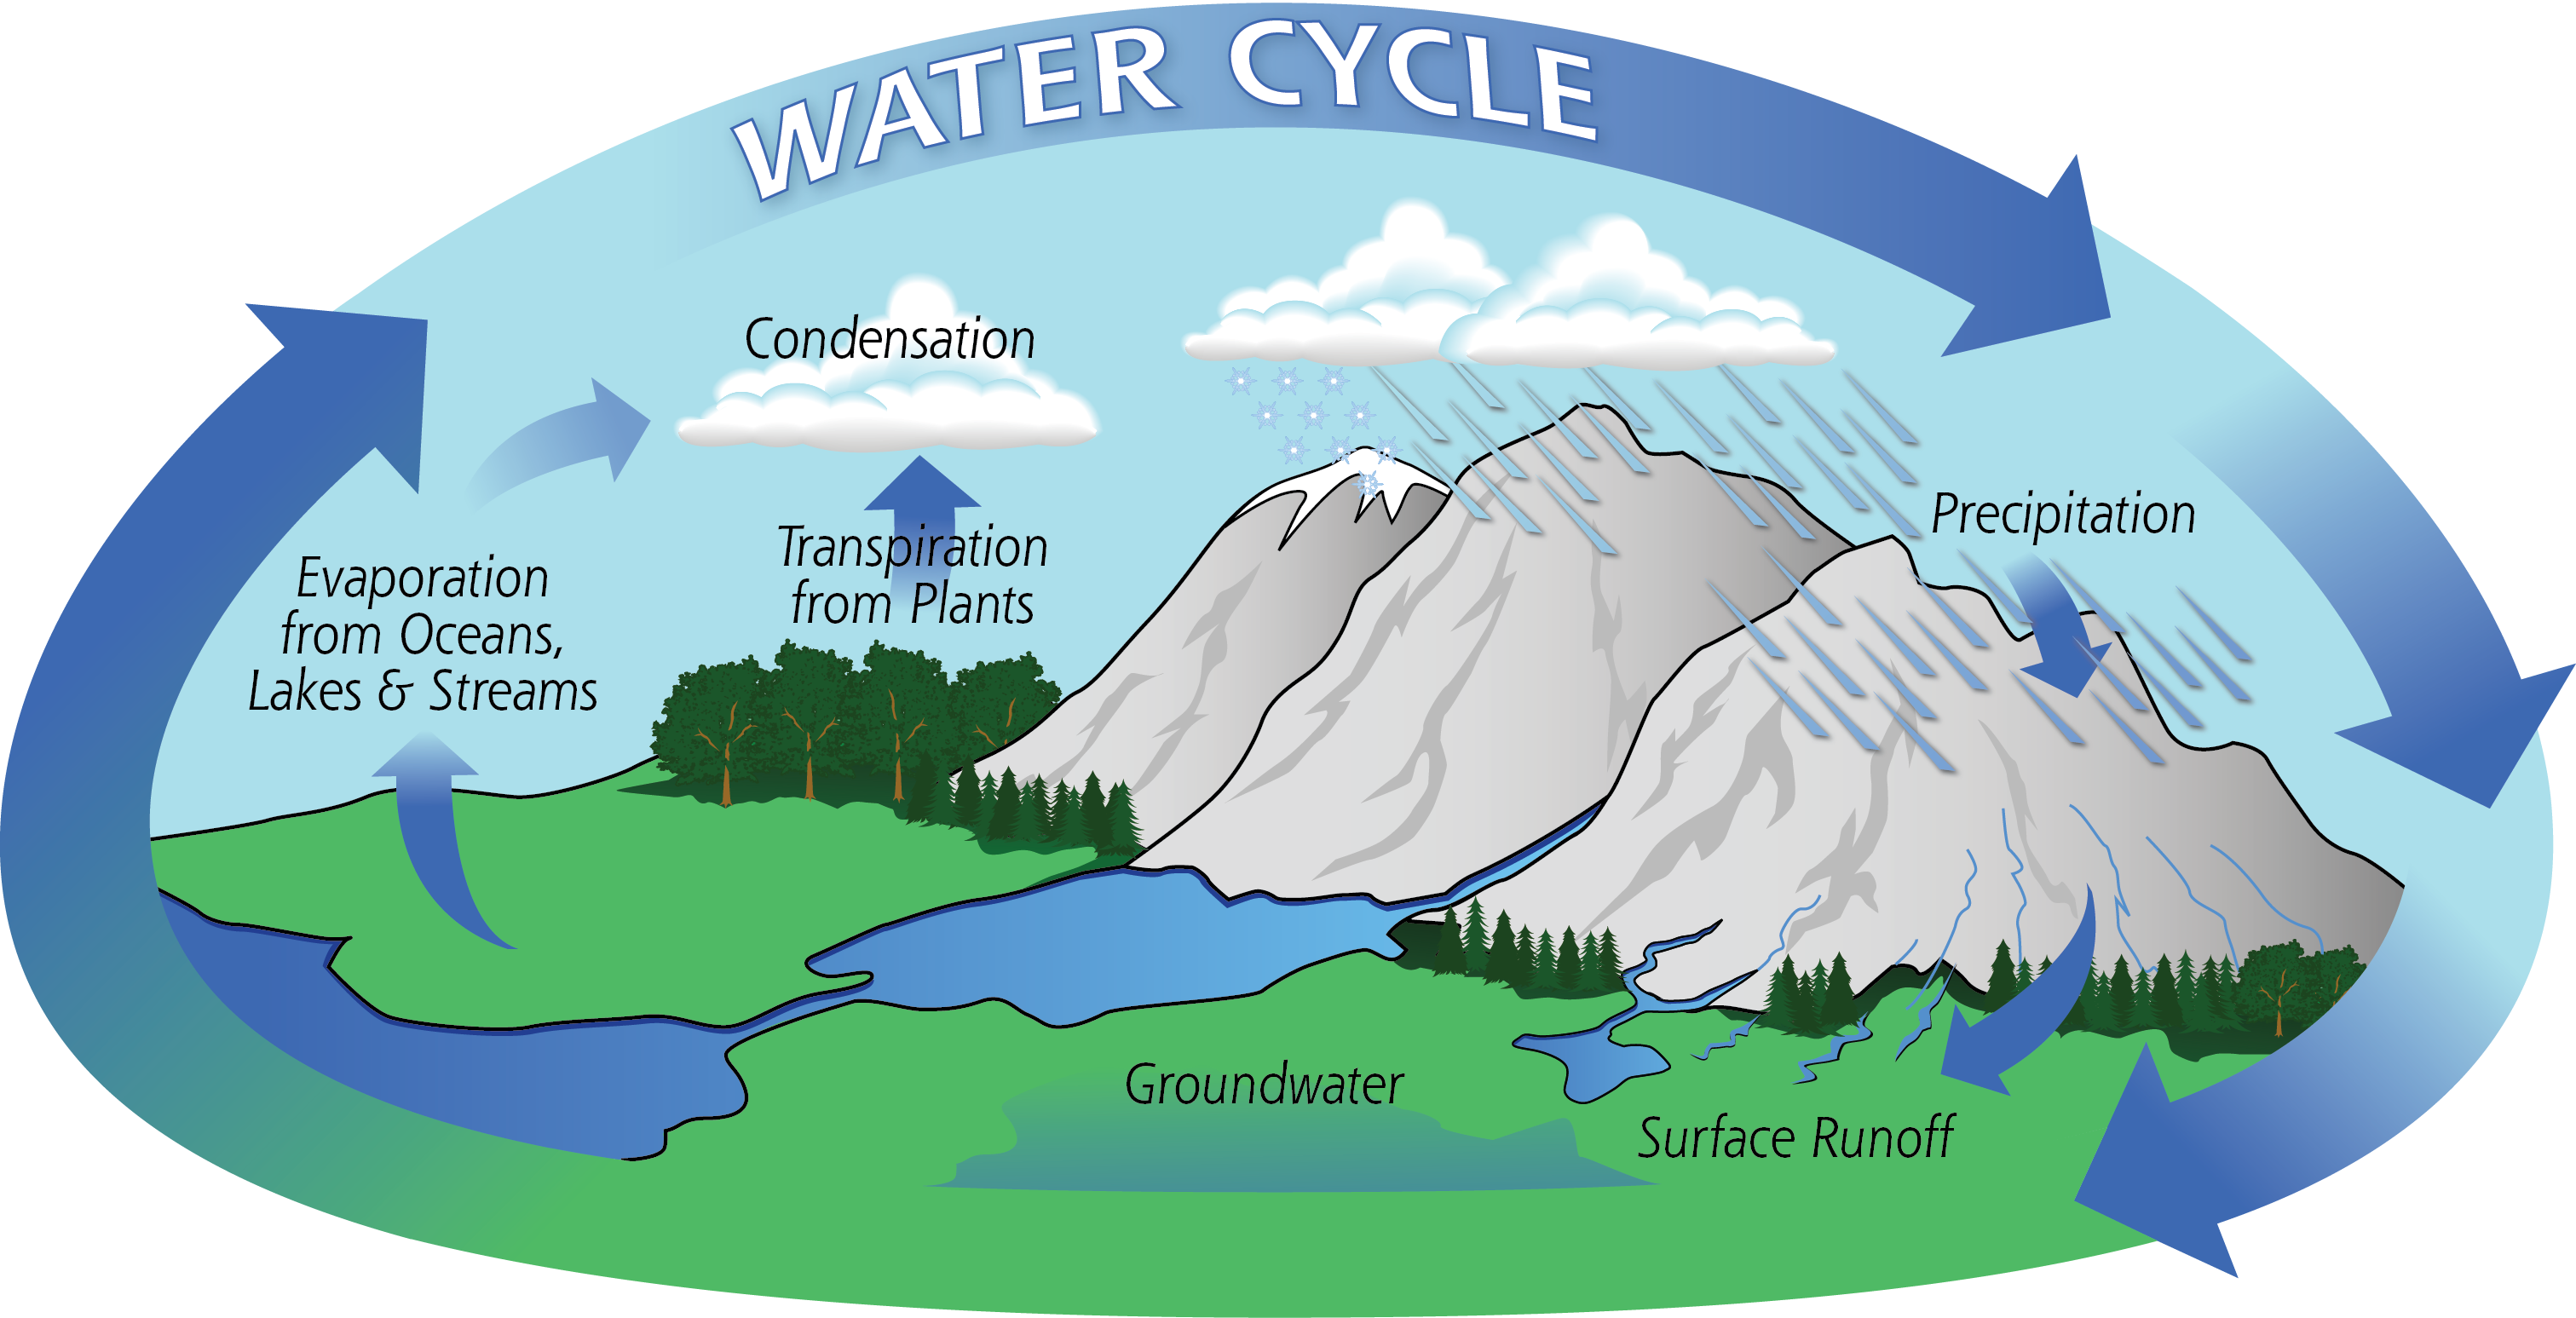 The Water Cycle | Precipitation Education